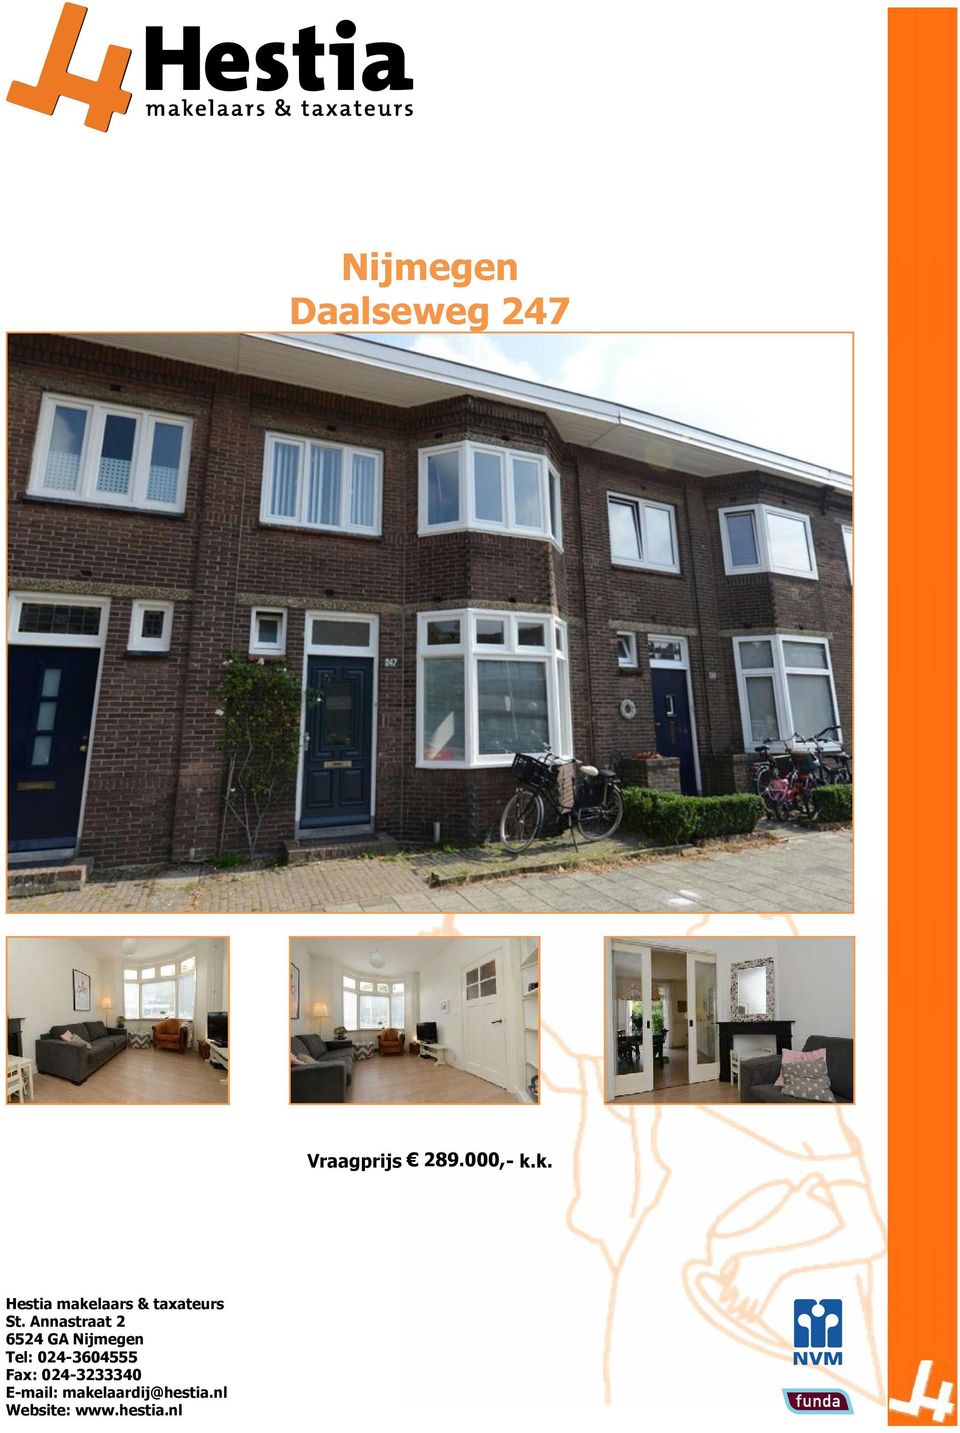 Annastraat 2 6524 GA Nijmegen Tel: 024-3604555